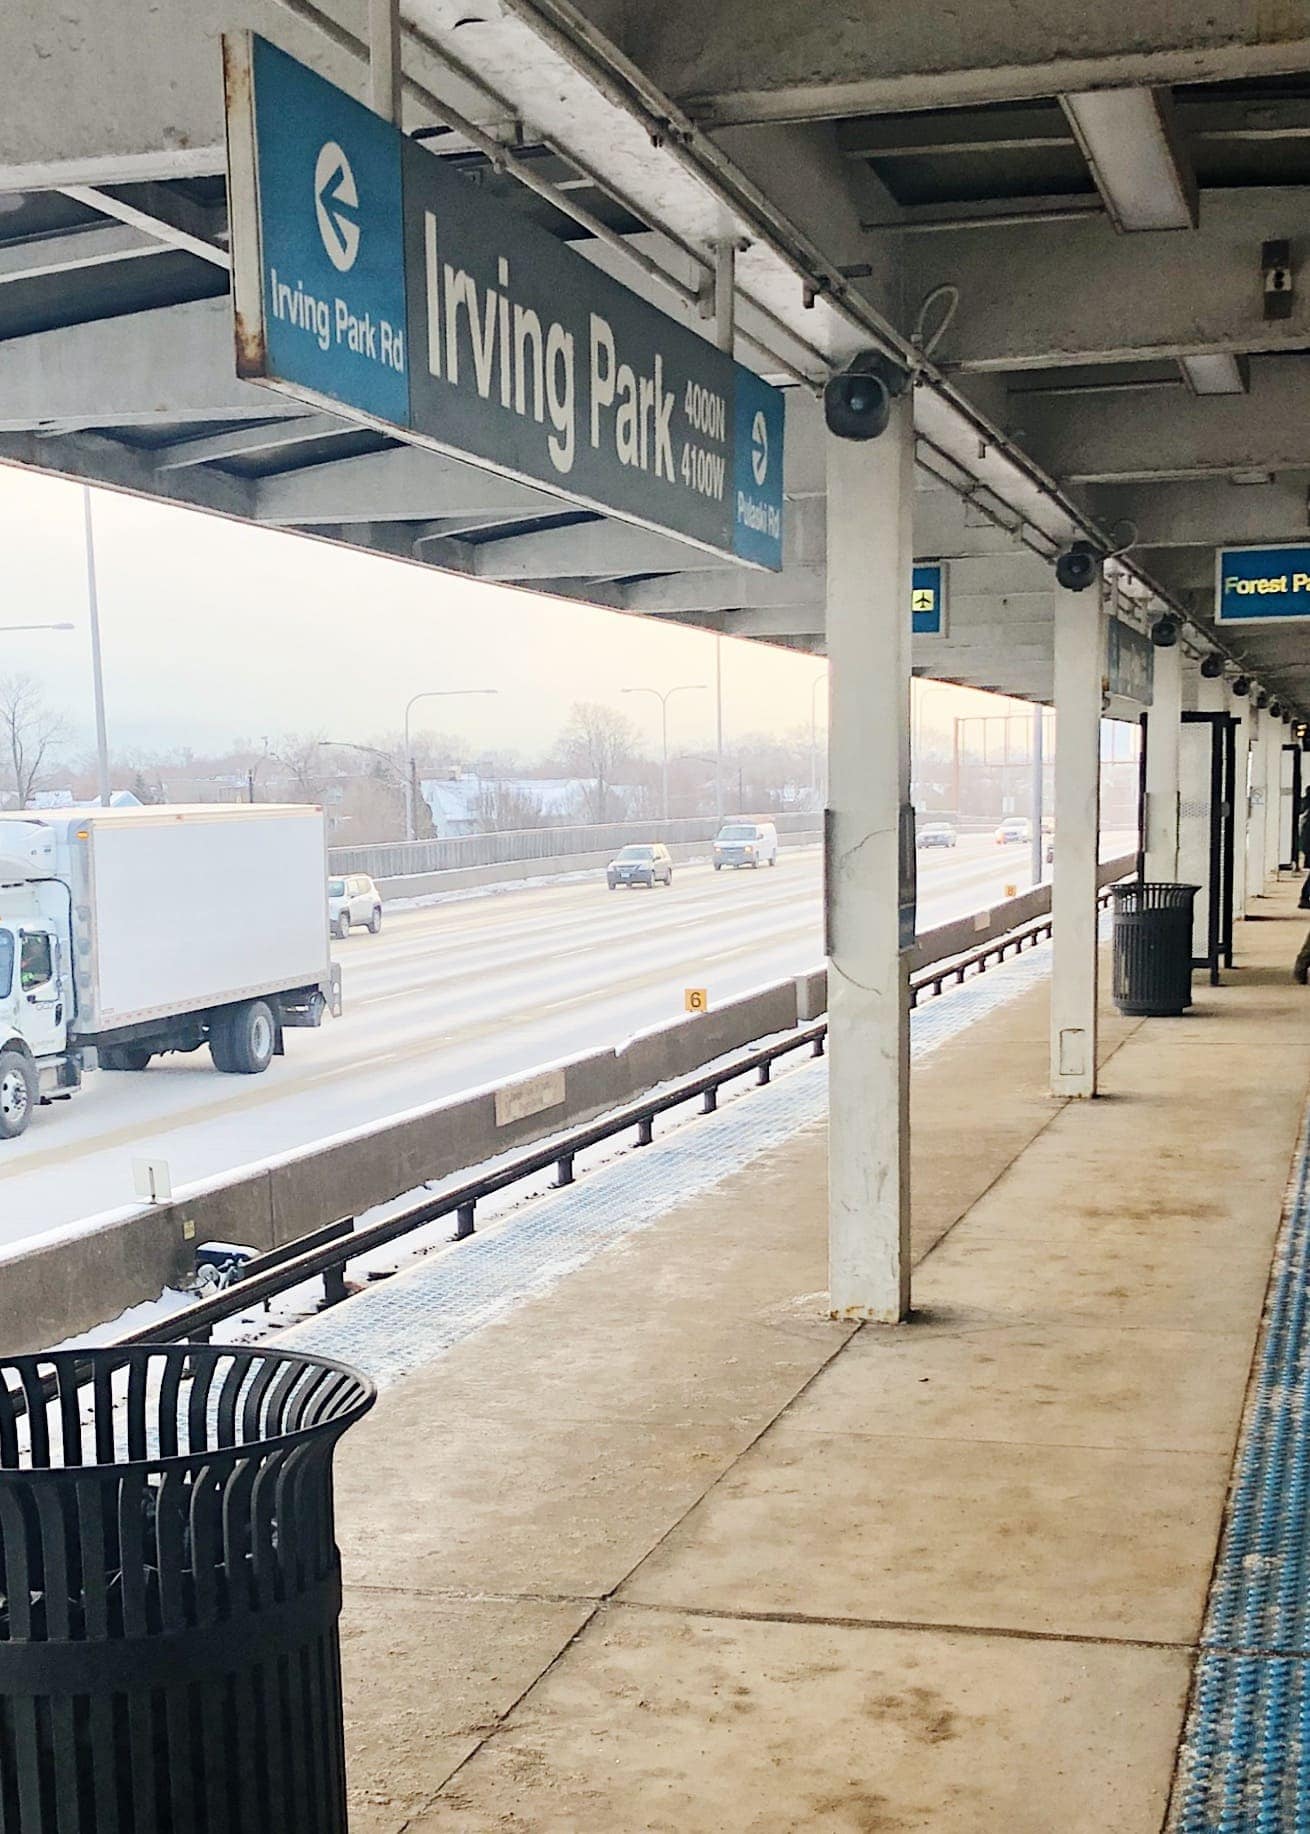 Irving Park blue line stop